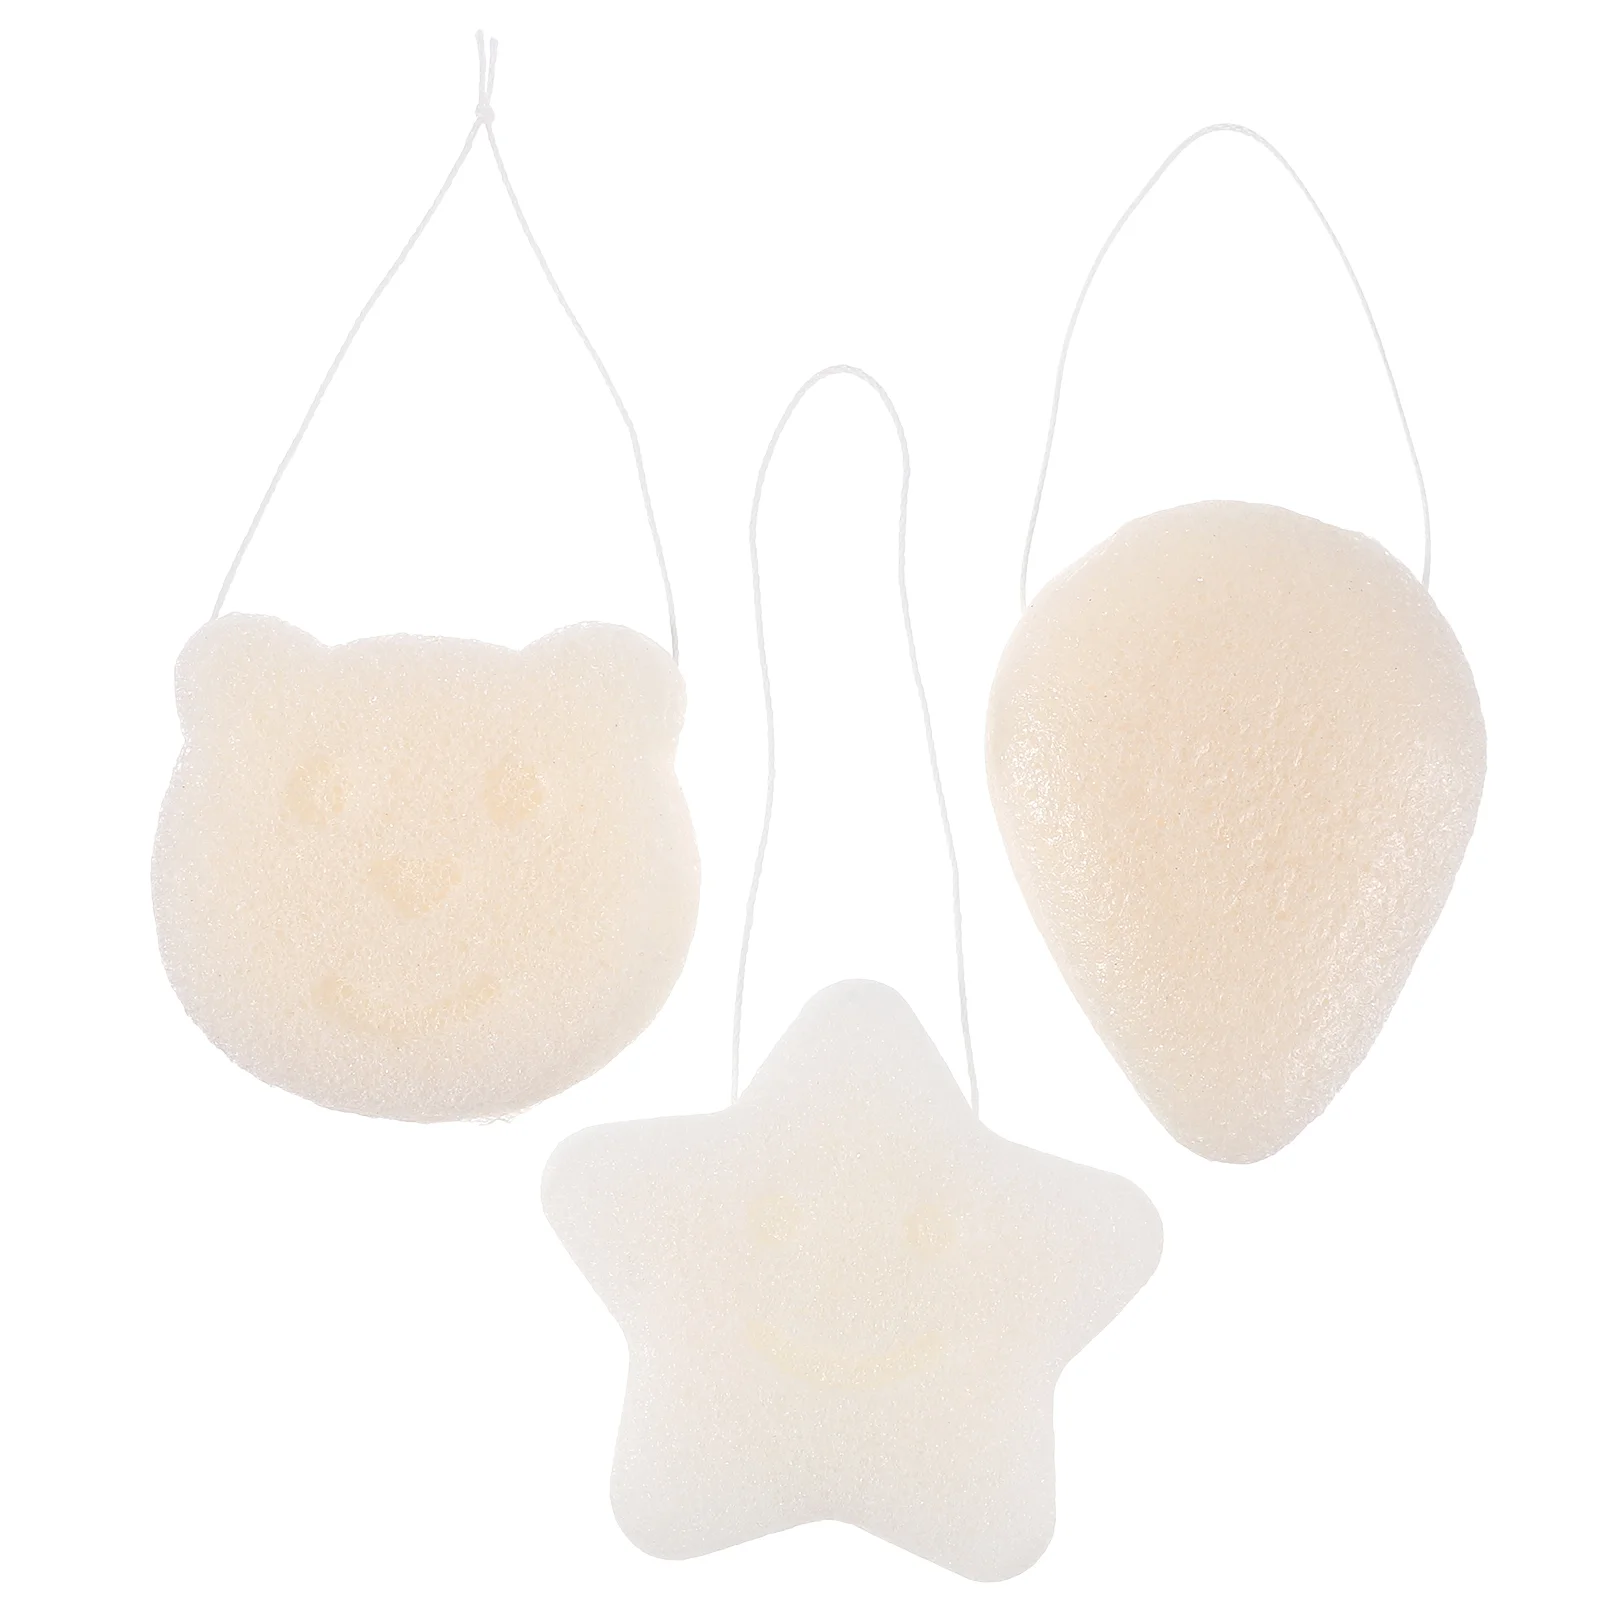 

3 Pcs Facial Sponges Washing Face Konjac Cleansing Exfoliating Cute Body Bath Ball/Bath Wipe/Bath Flower Cleaning Facials